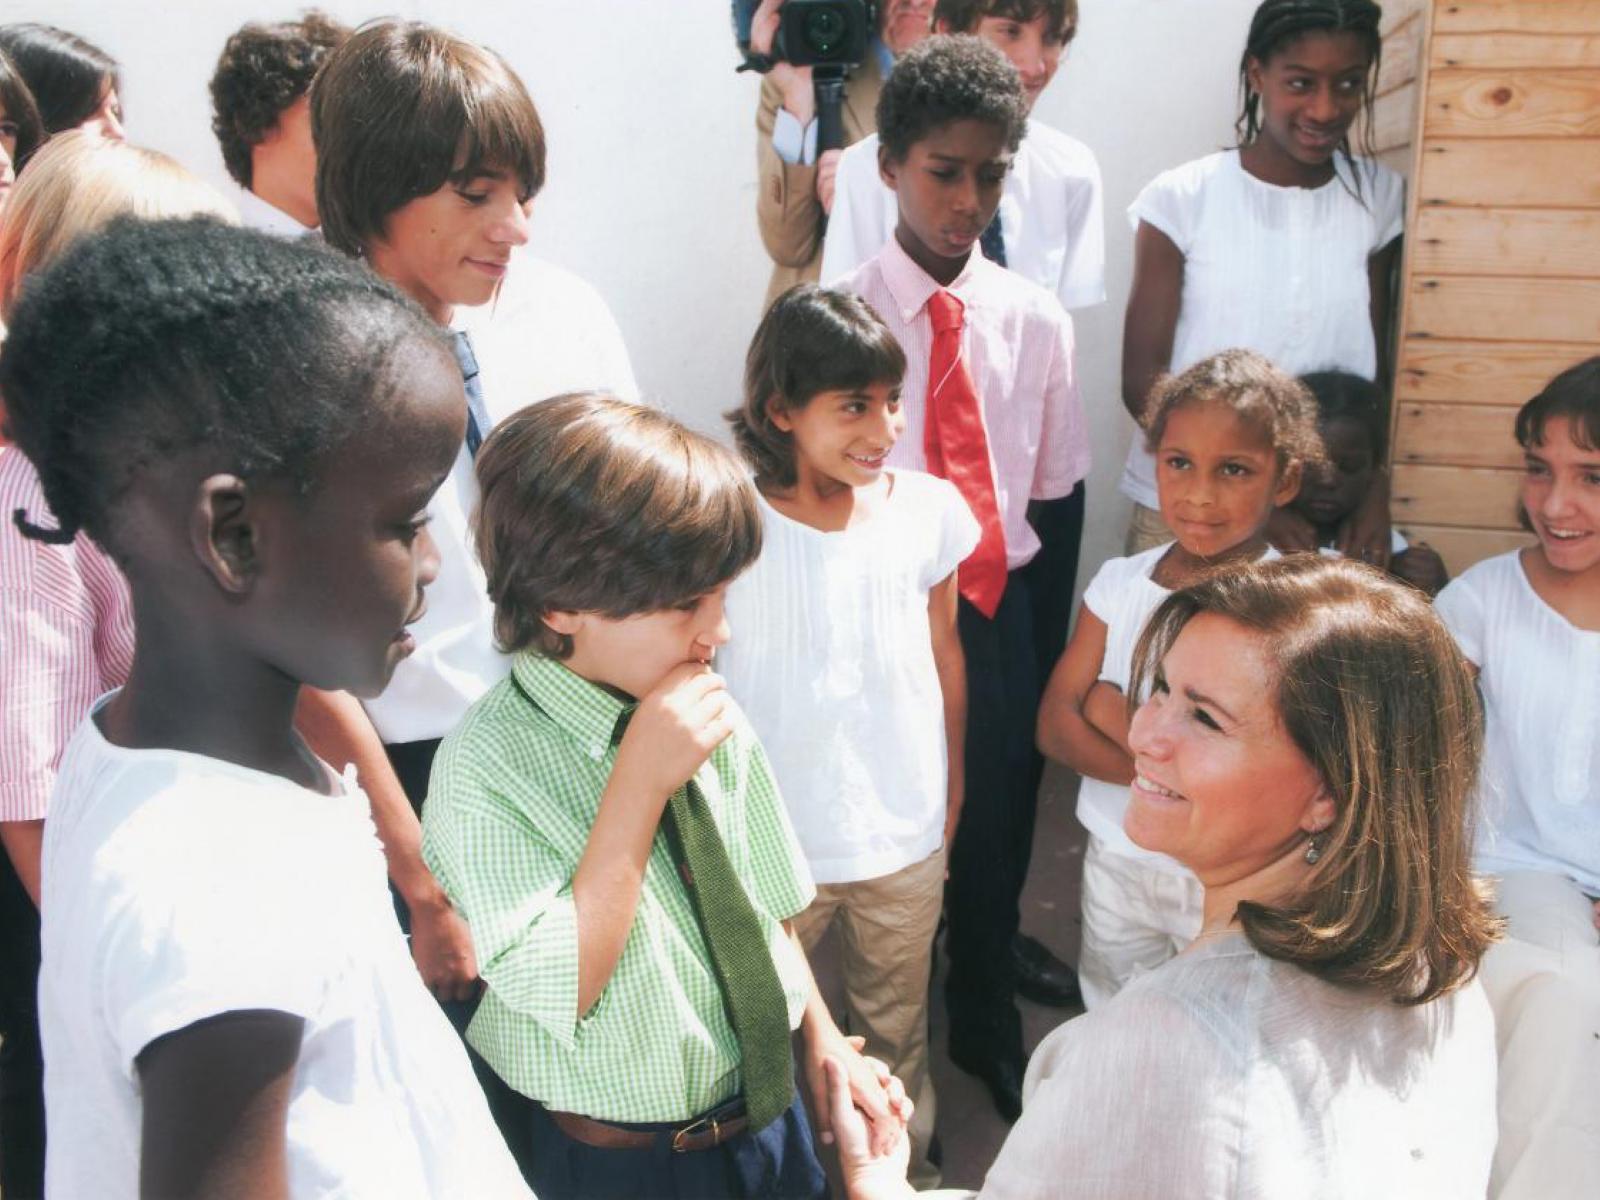 The Grand Duchess talking to children